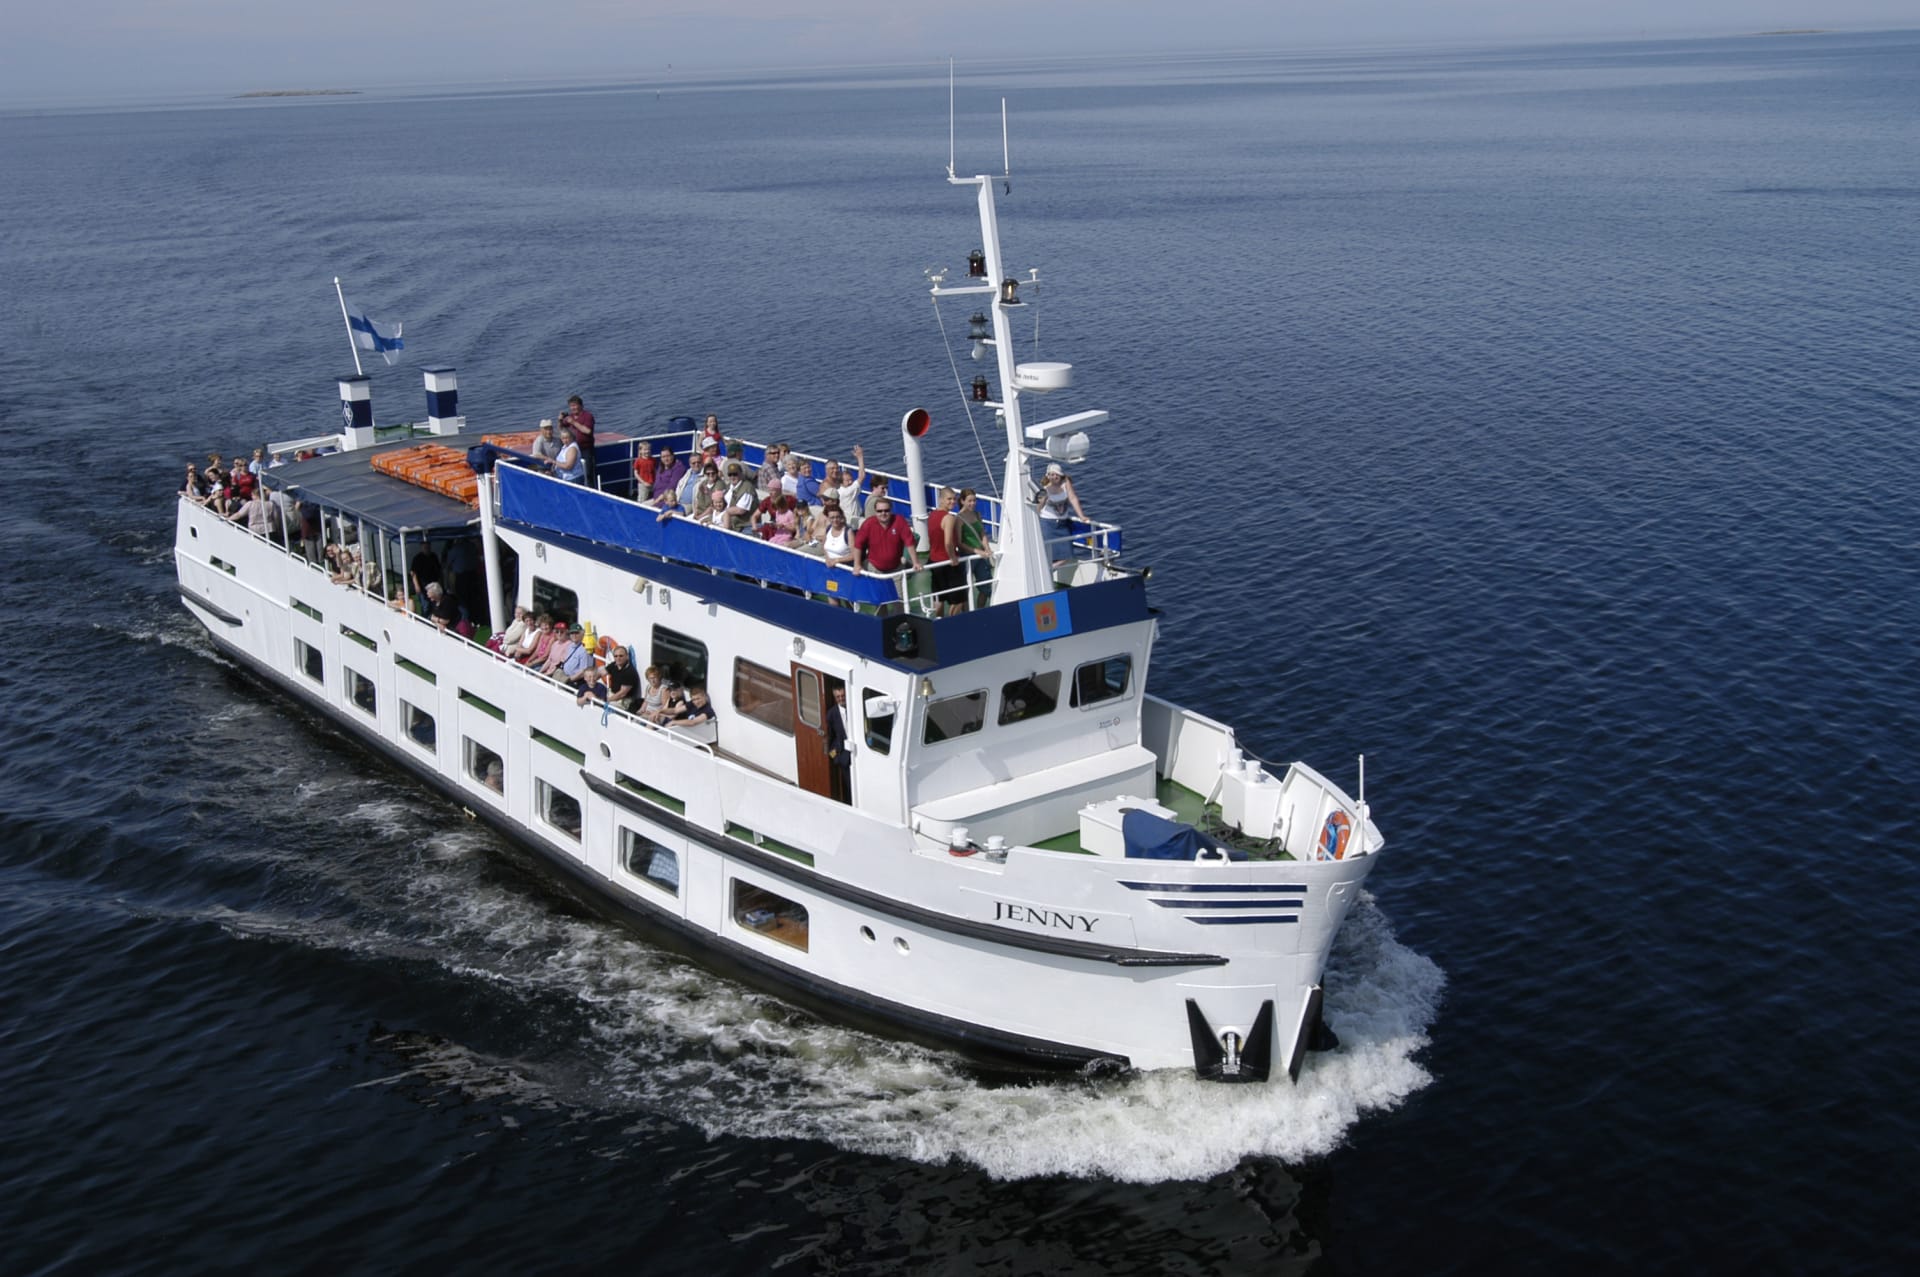 The archipelago cruise ship M/S Jenny operates to the lighthouse island of Tankar during the summer season.